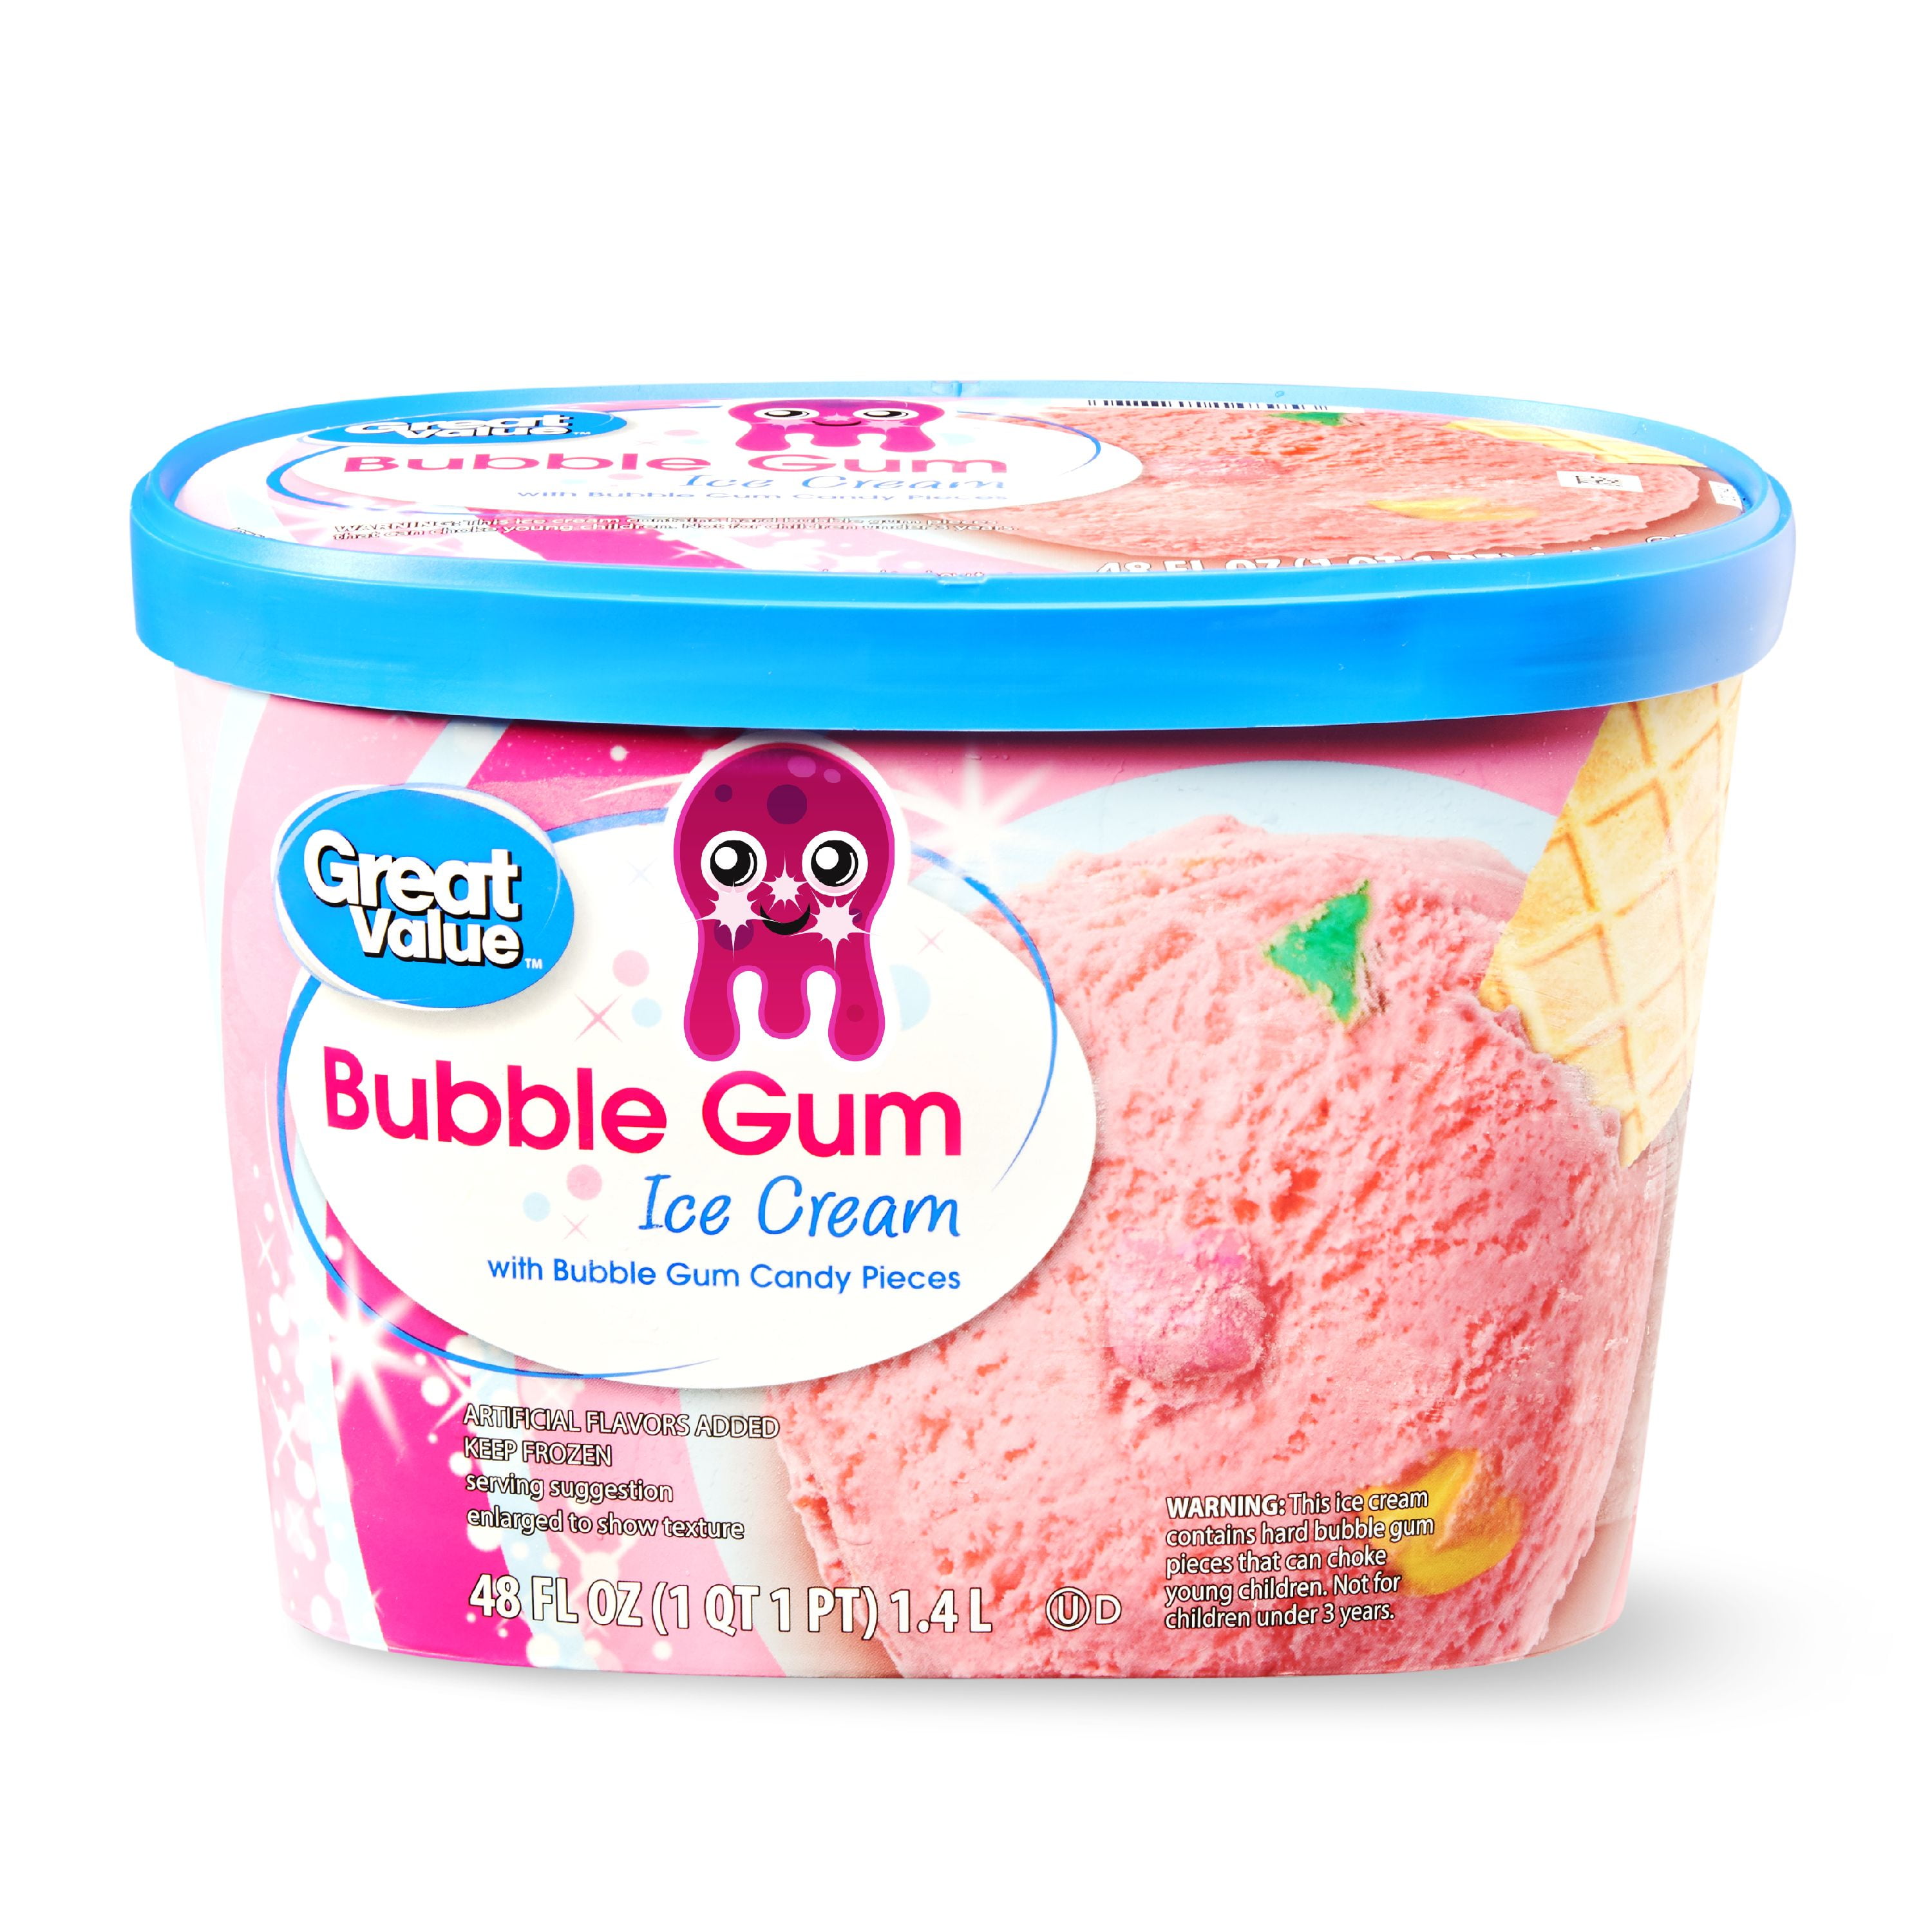 Great Value Ice Cream, Bubble Gum, 48 fl oz - Walmart.com.